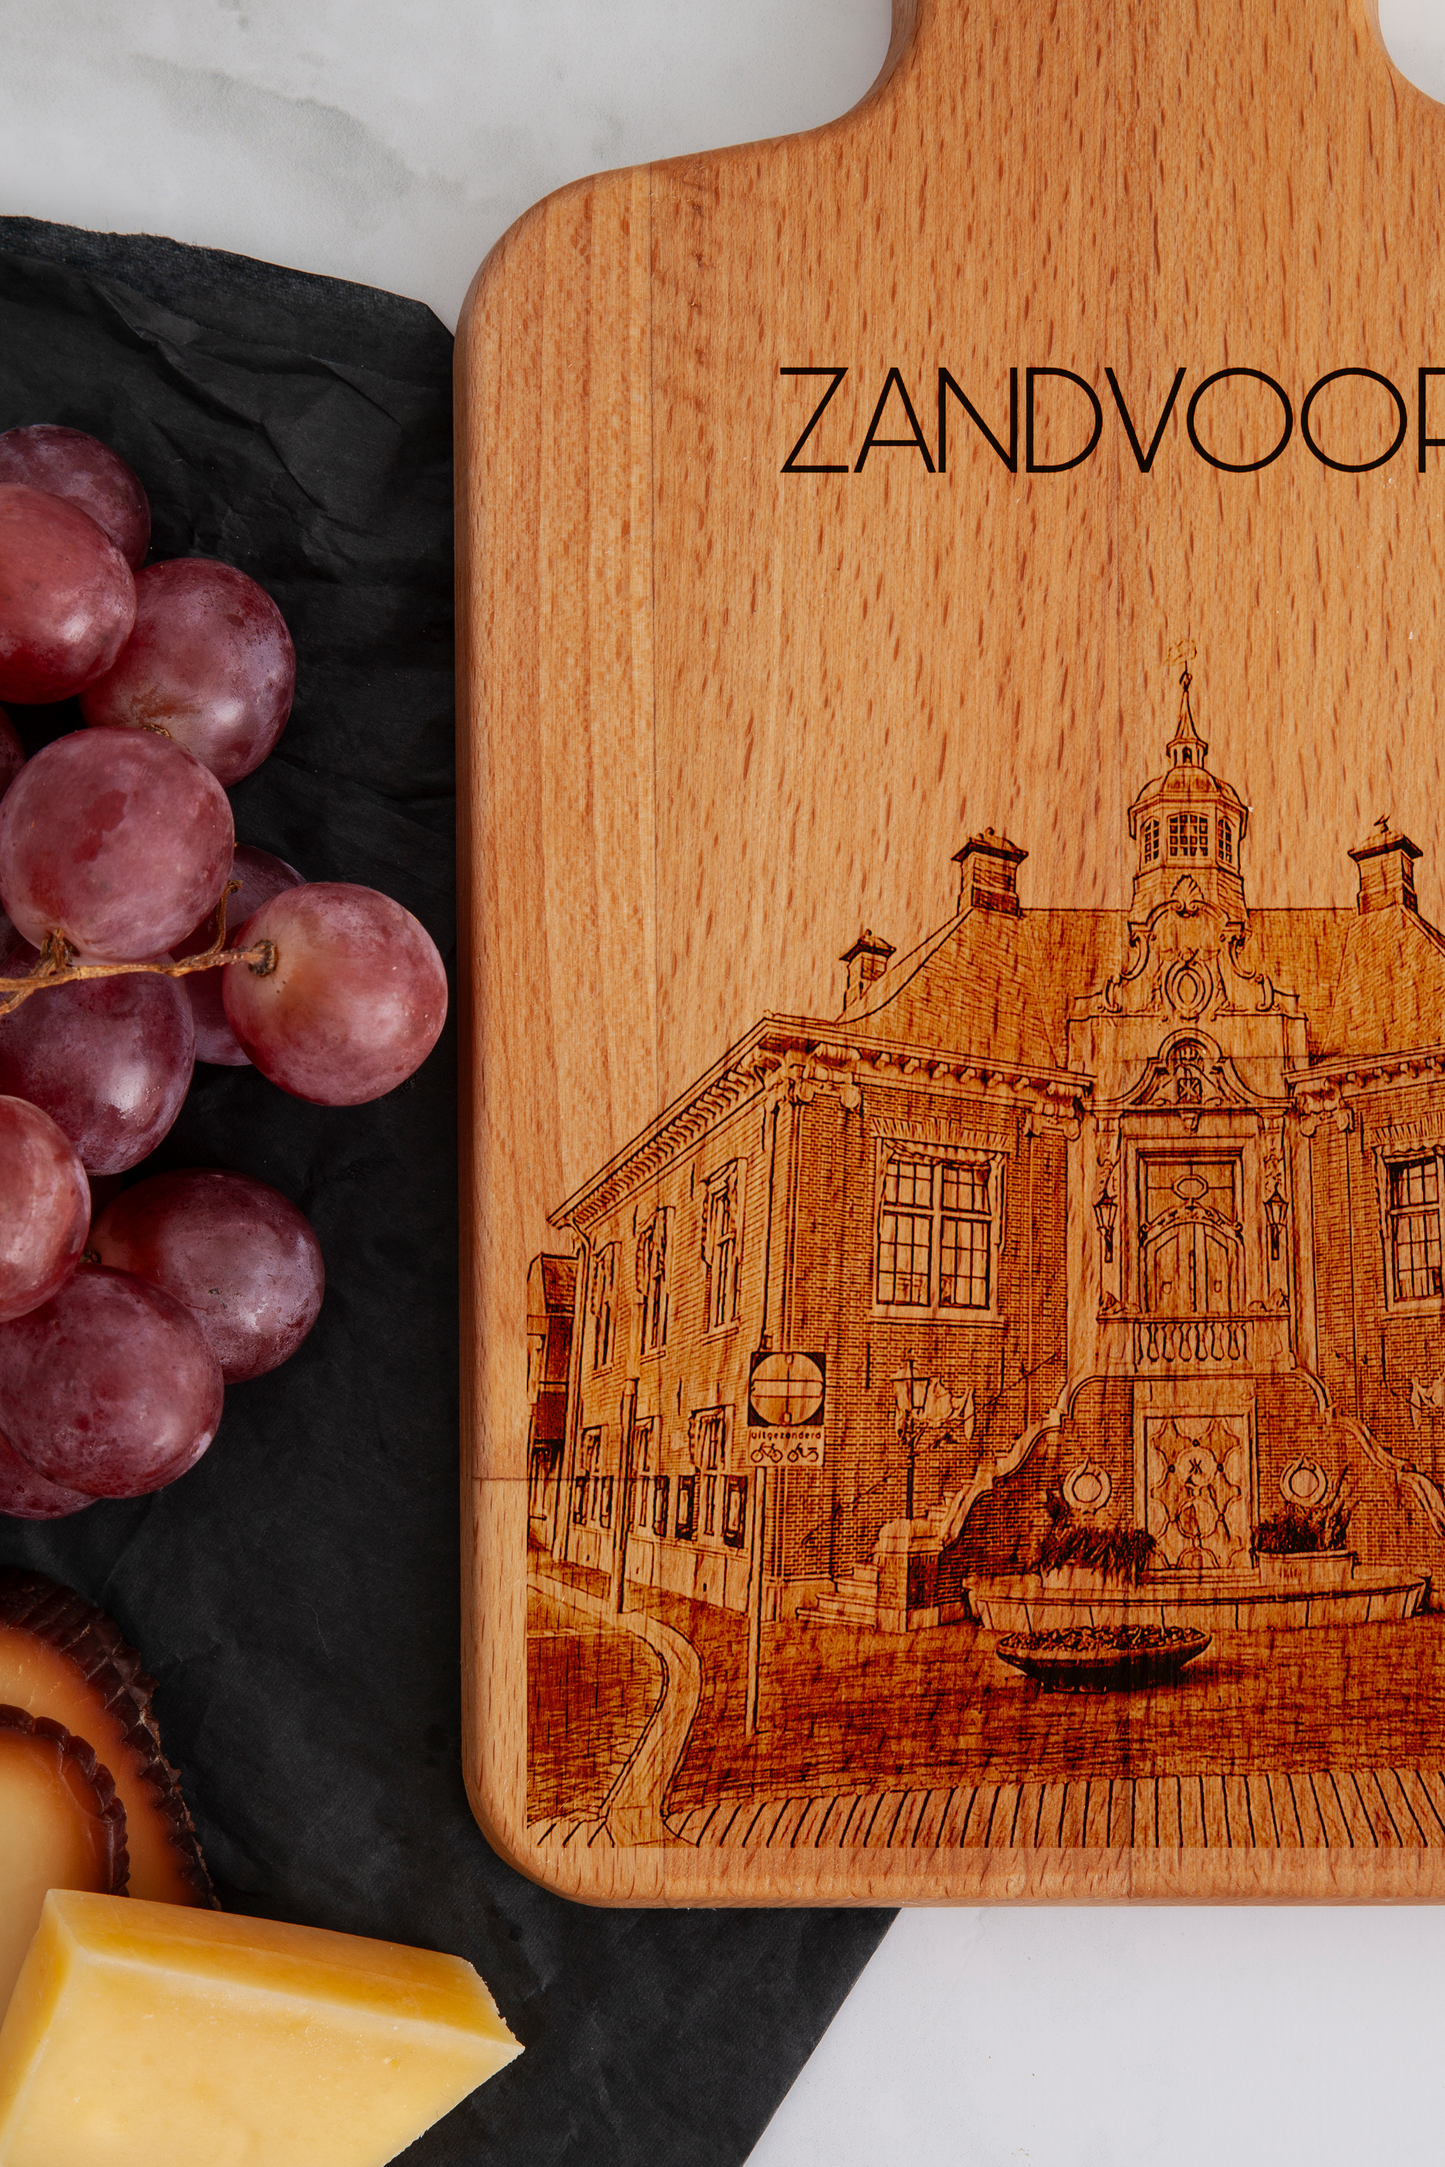 Zandvoort, Stadhuis, cheese board, close-up